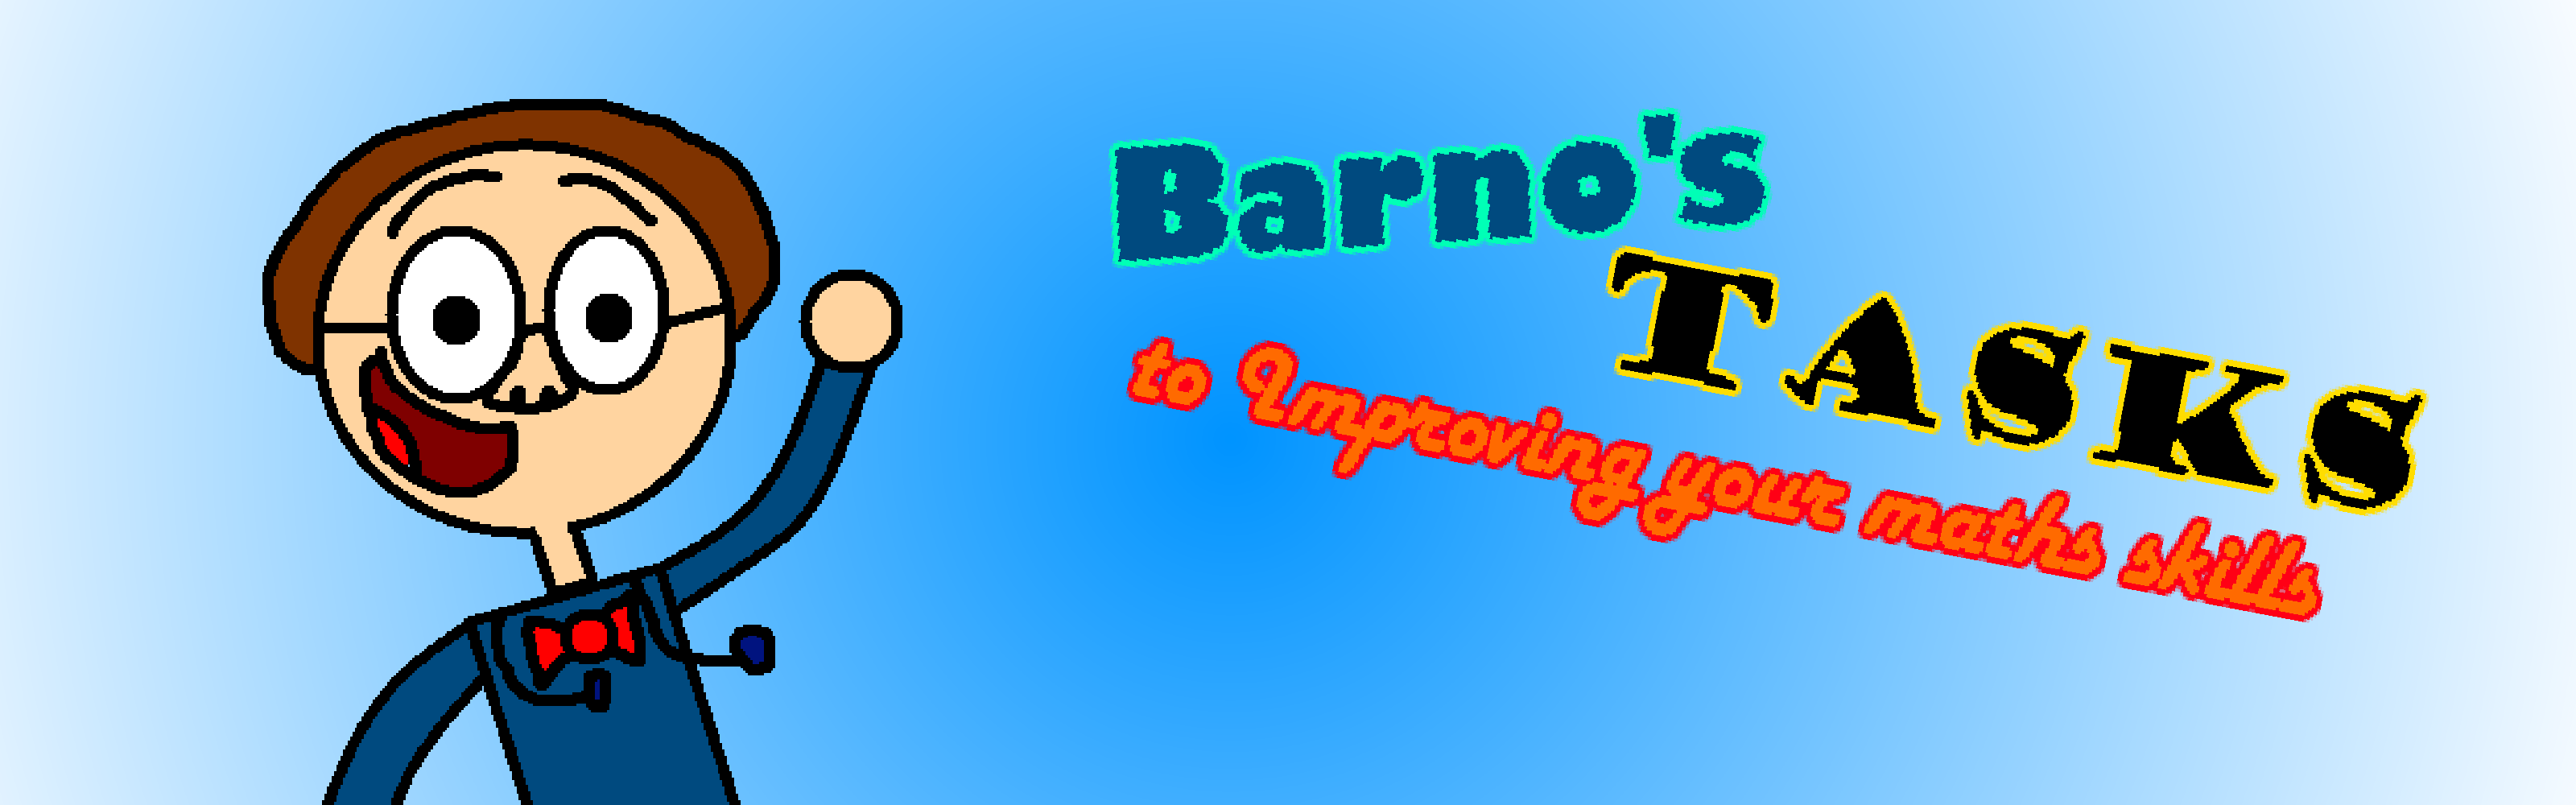 Barno's Tasks to Improving your Maths Skills! (Baldi's Basics Classic mod)